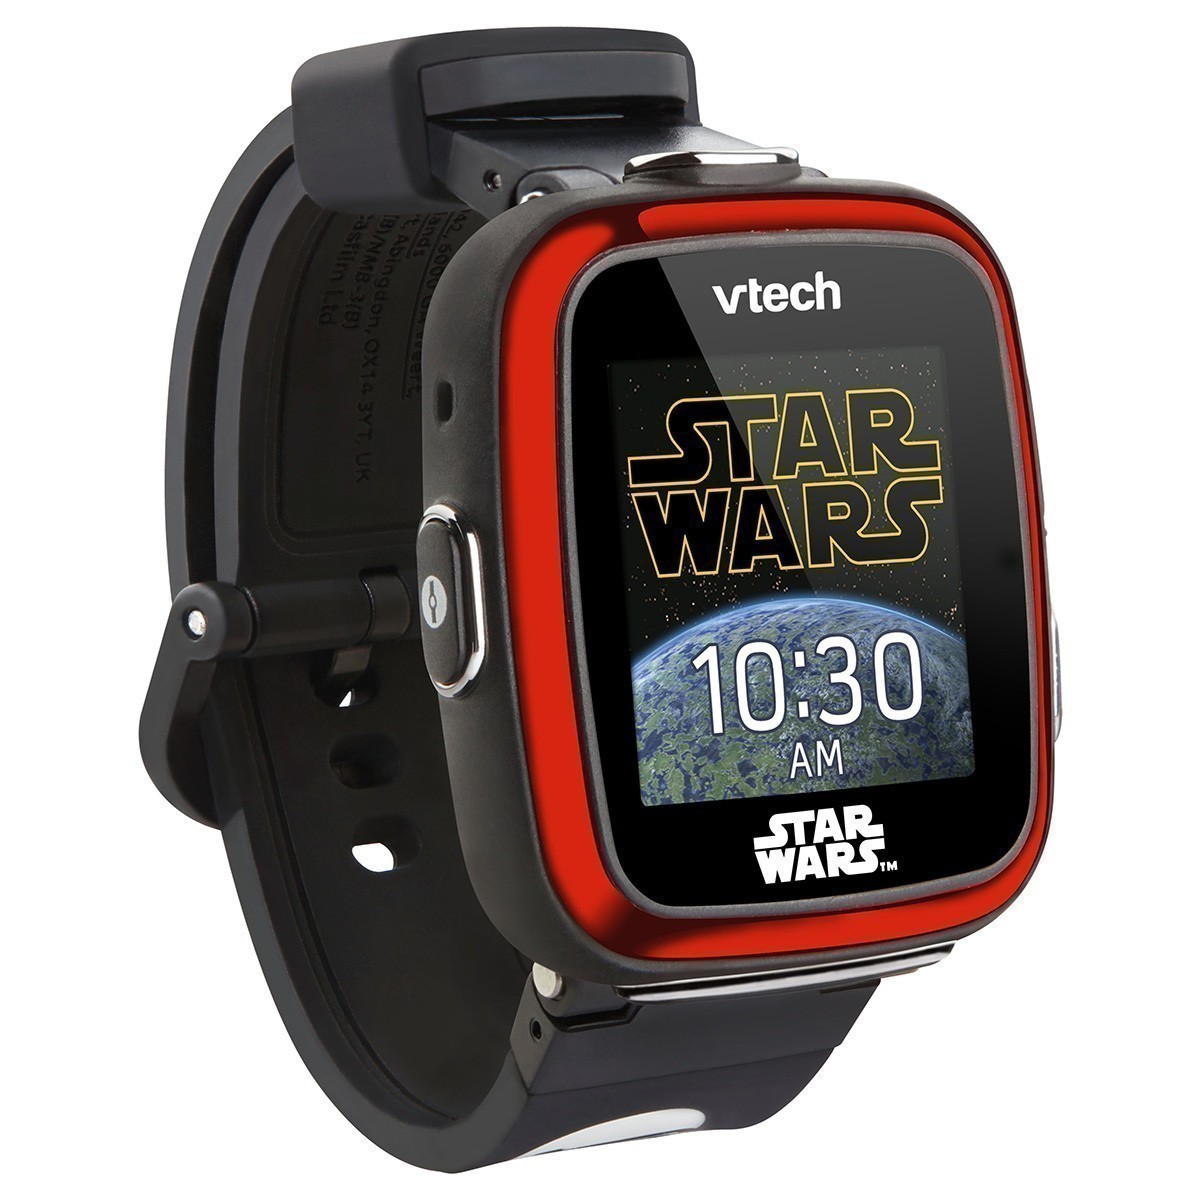 Vtech - Kidizoom - Star Wars Stormtrooper Camera Watch